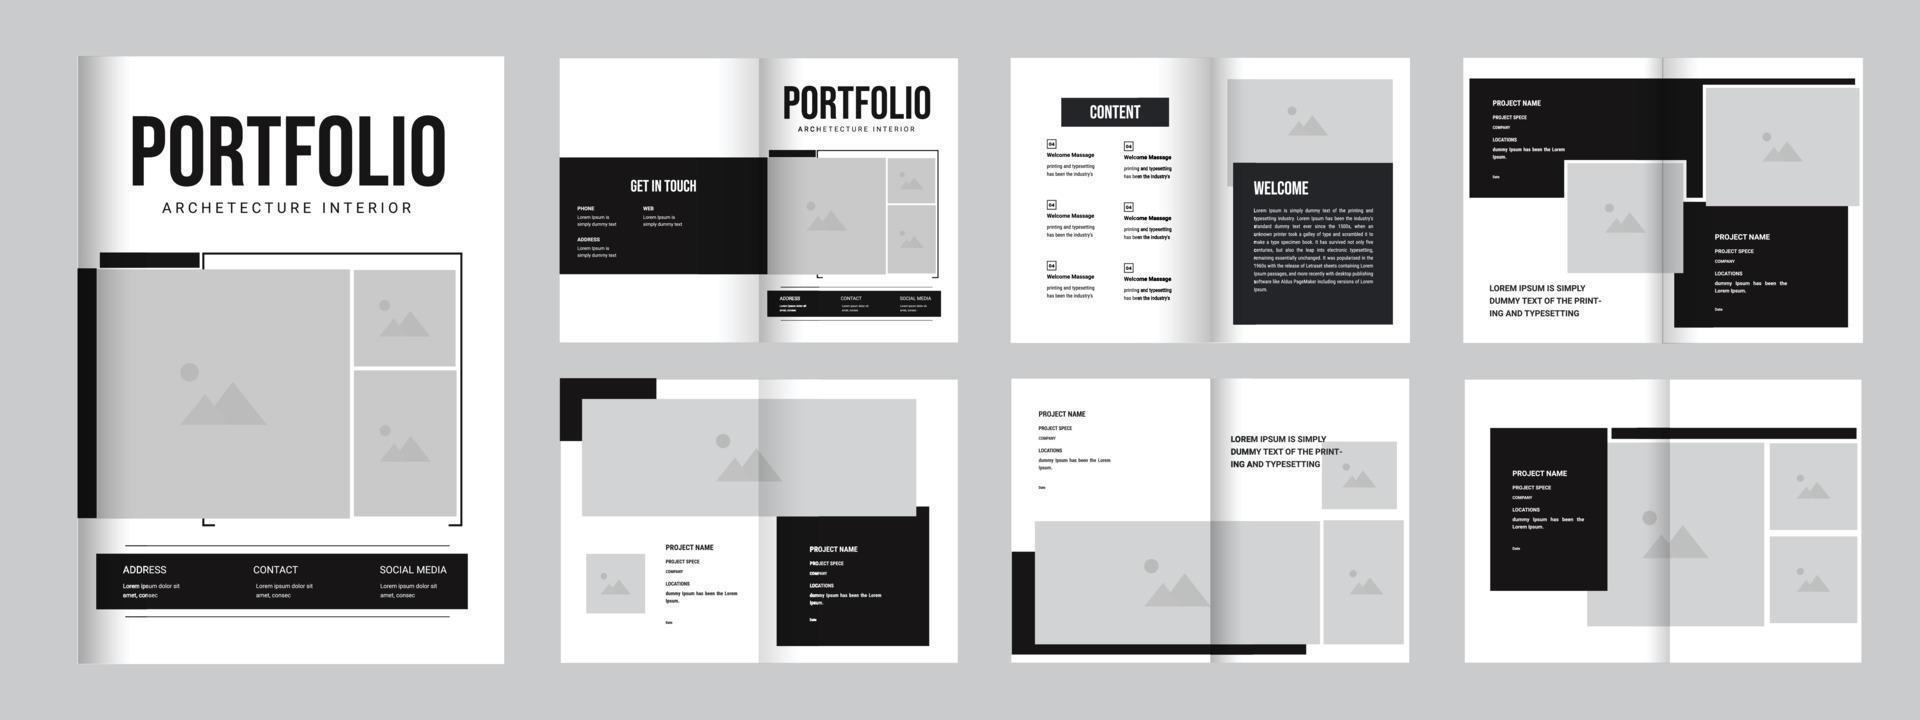 Architecture portfolio or portfolio template design, A4 size professional portfolio template vector